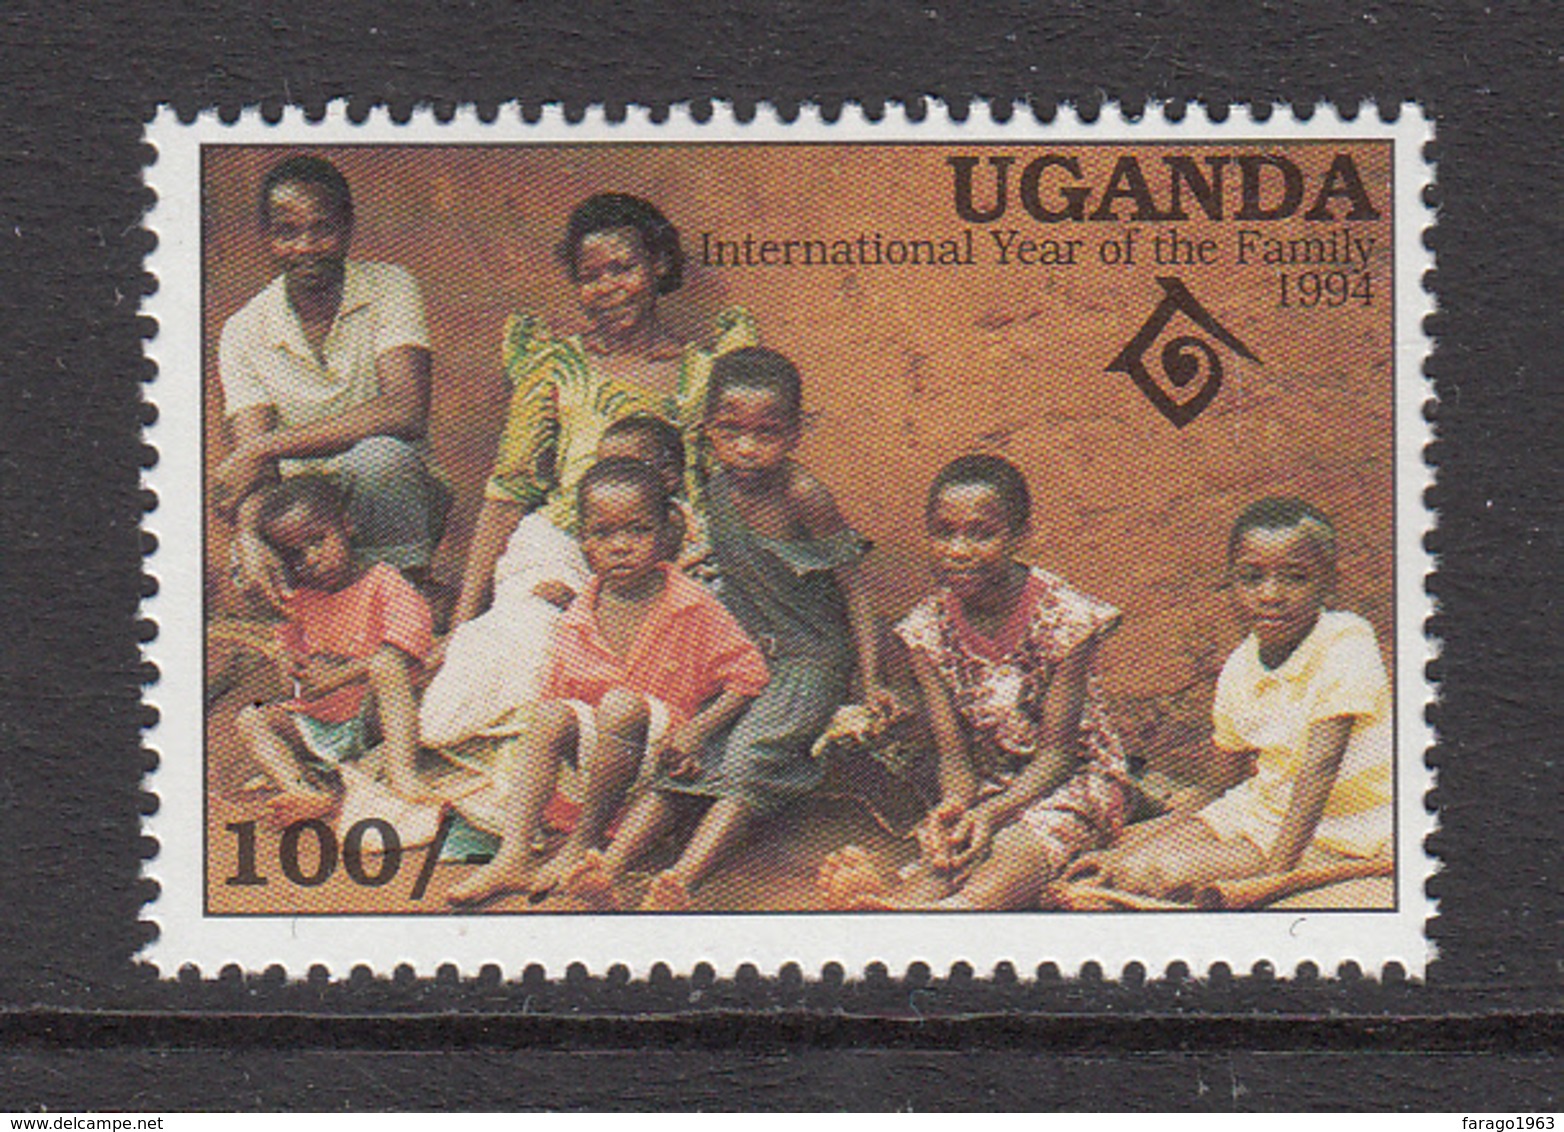 1994 Uganda Intl Year Of The Family Set Of 1 MNH - Ouganda (1962-...)